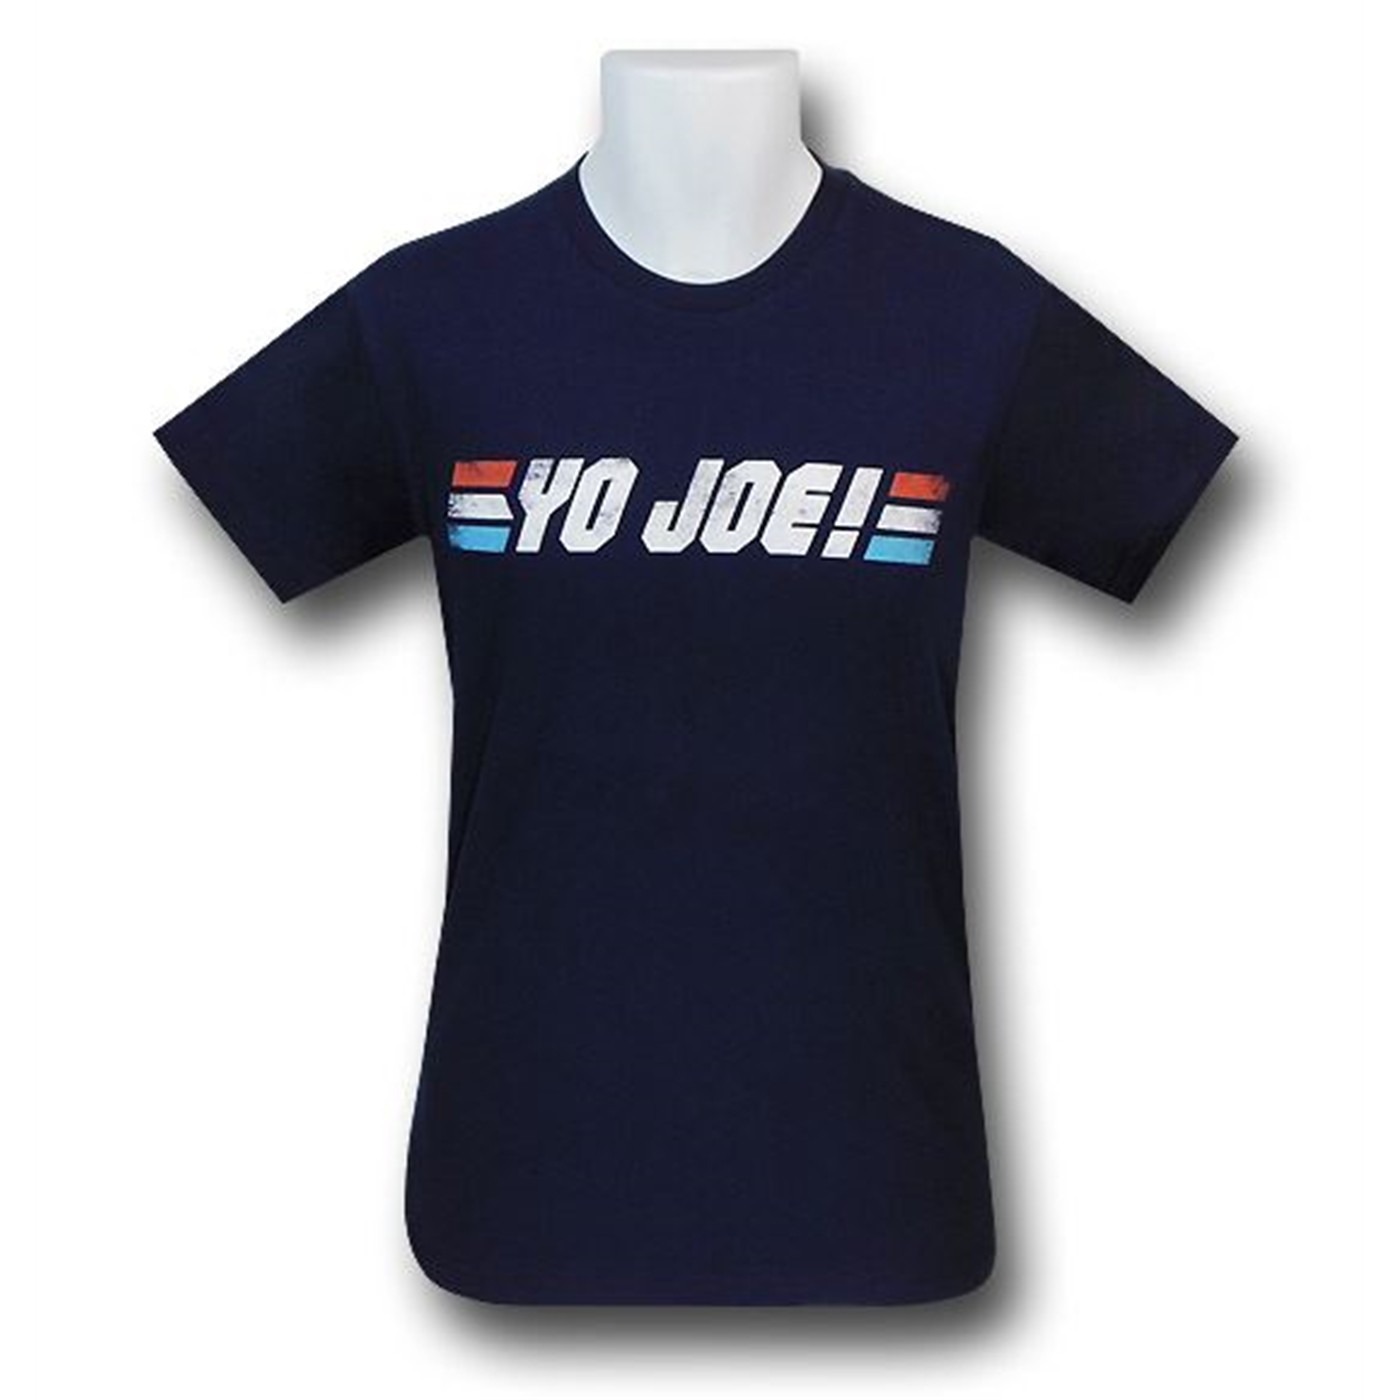 GI Joe Yo Joe! 30 Single T-Shirt